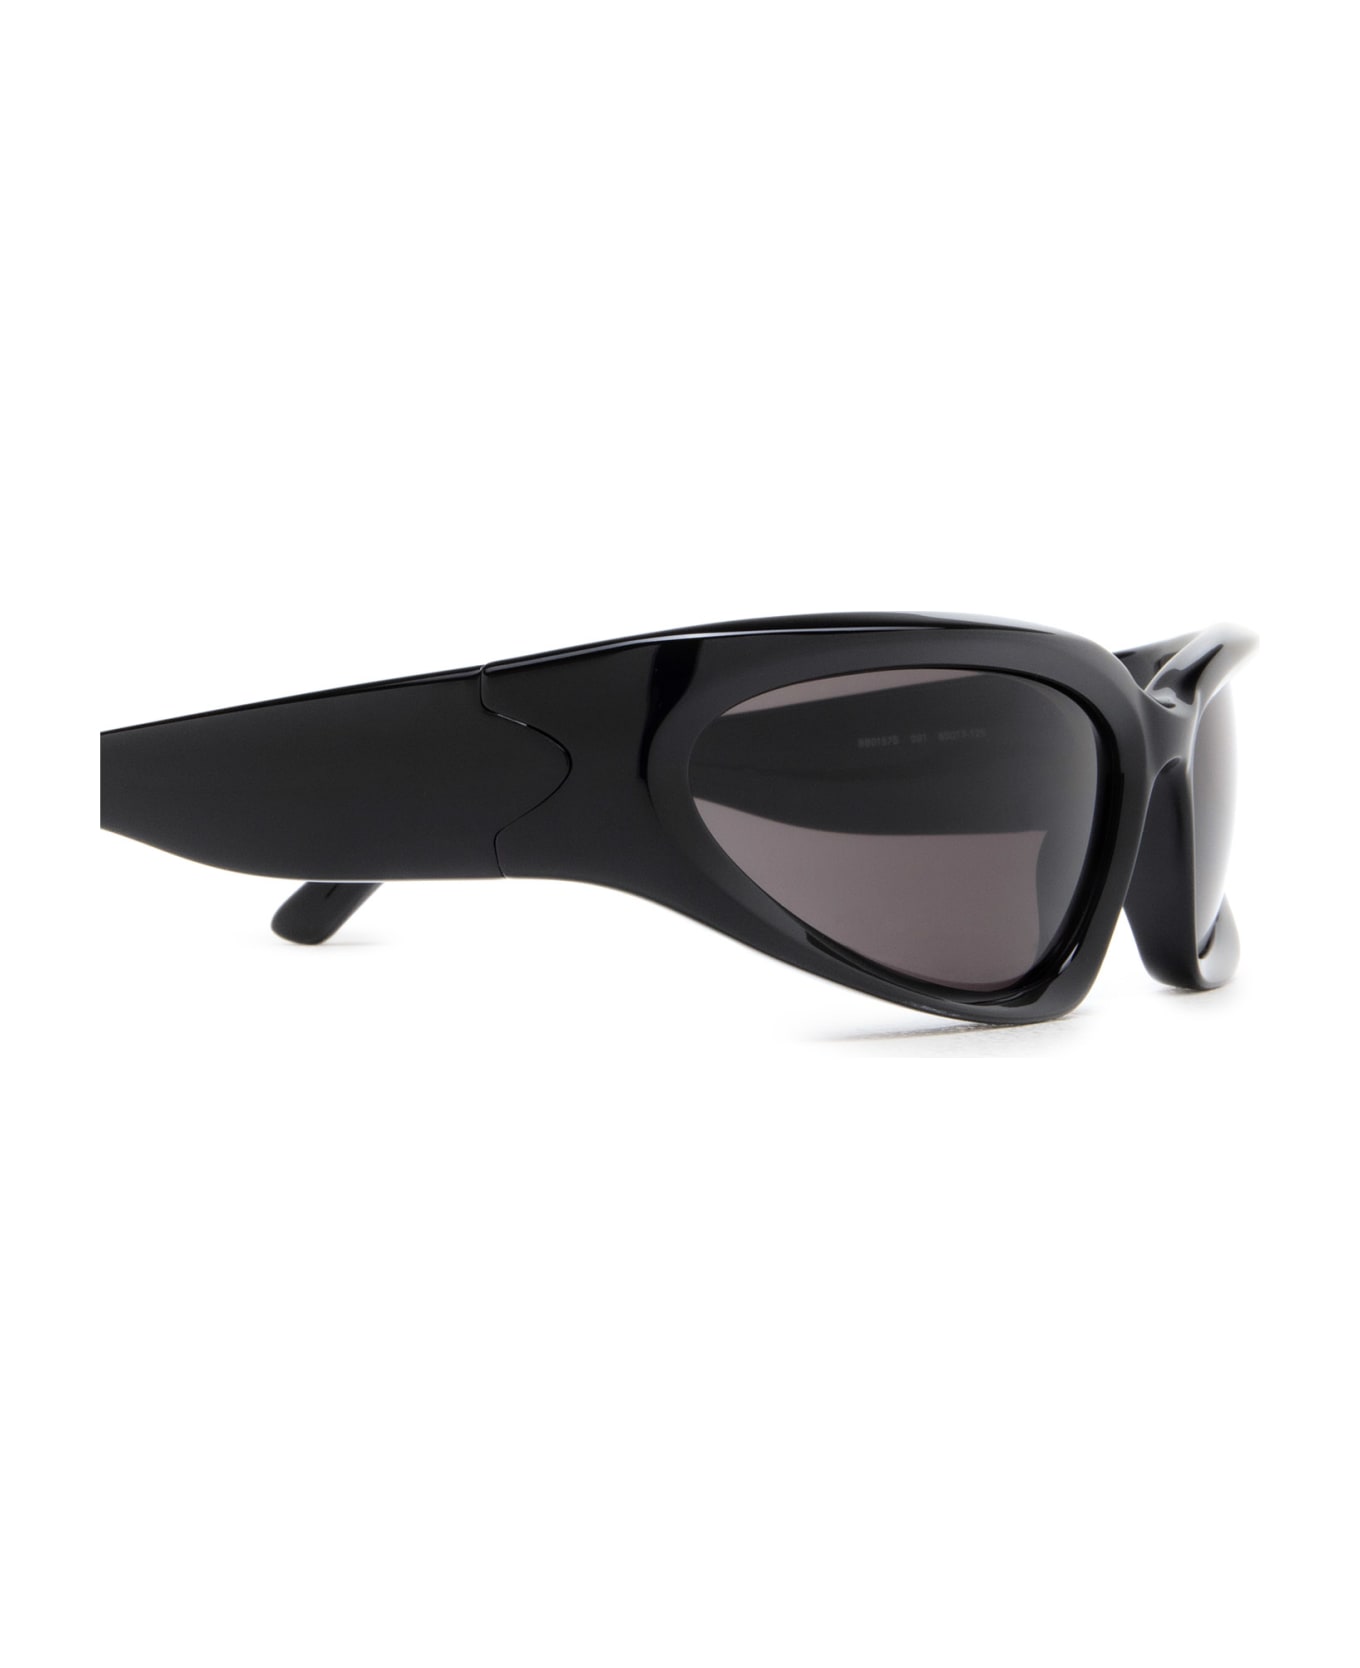 Balenciaga Eyewear Bb0157s Sunglasses - Black サングラス